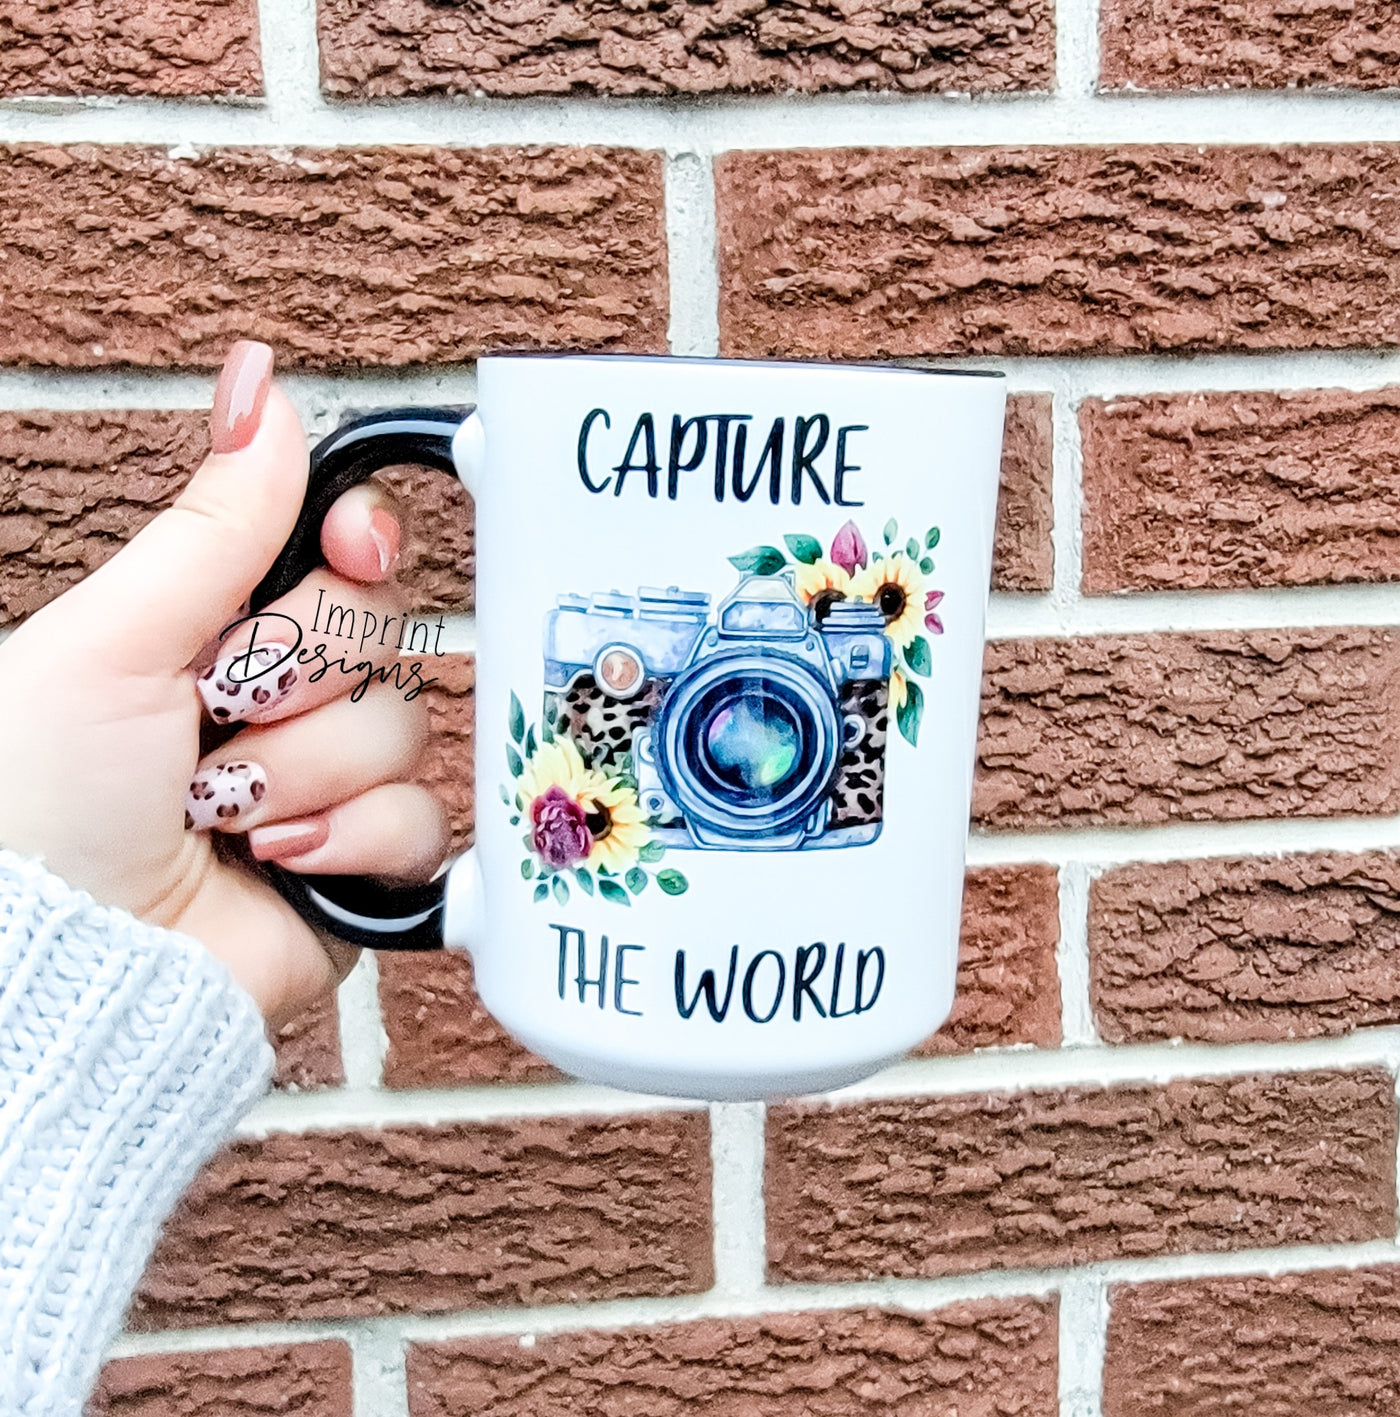 Capture the world